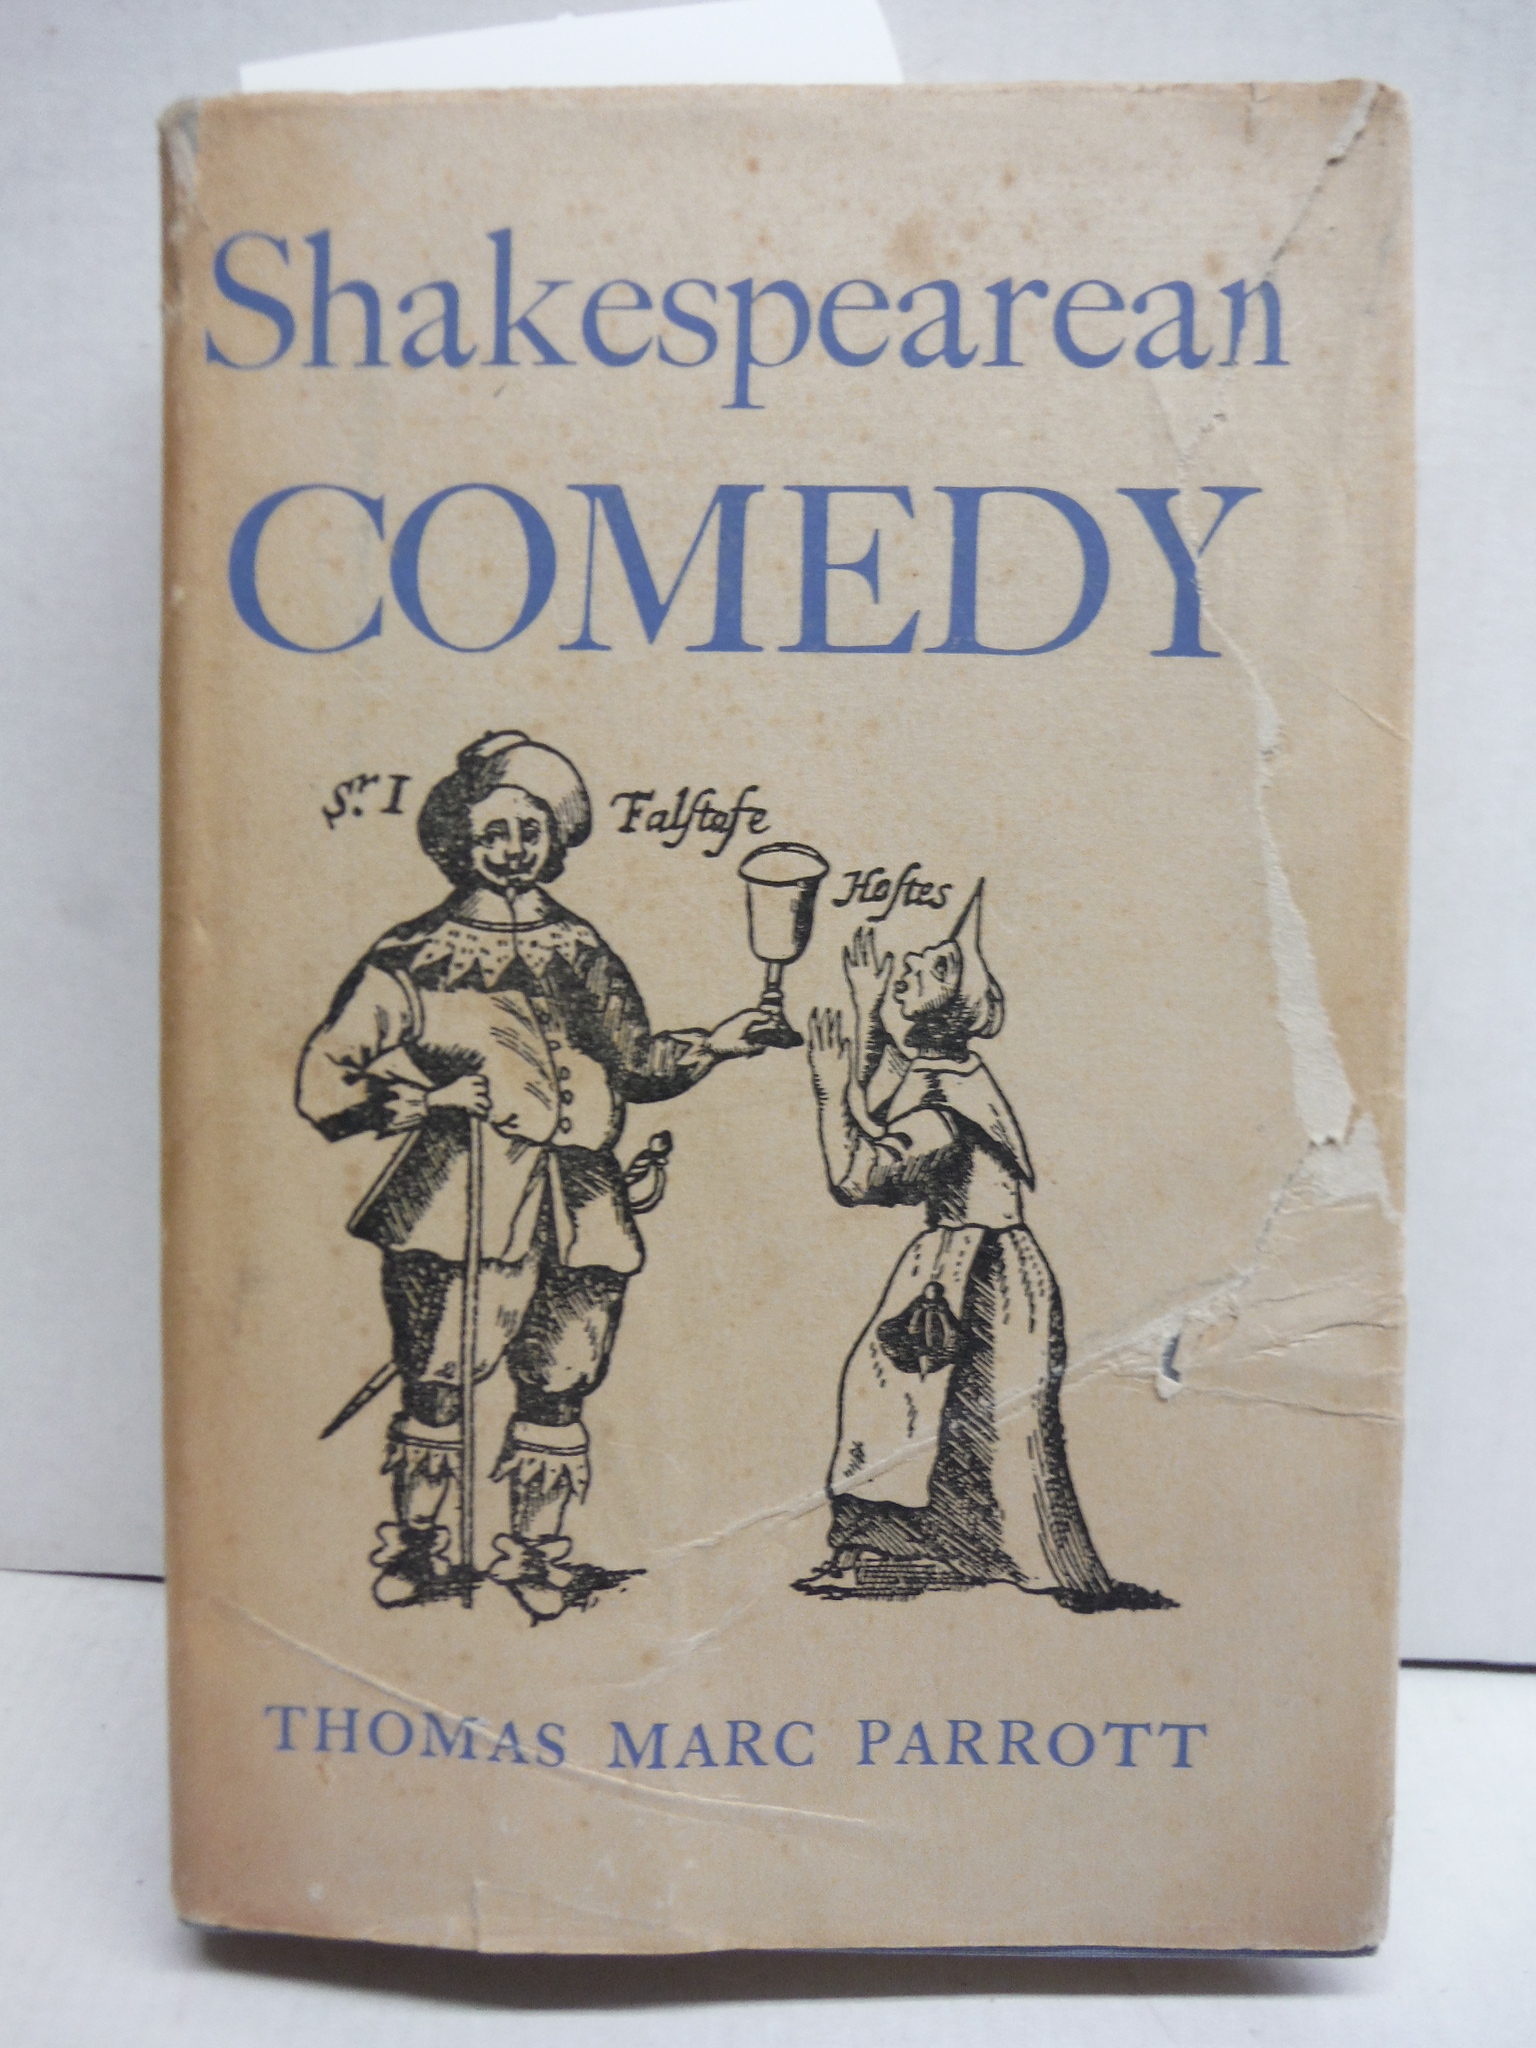 Shakespearean comedy